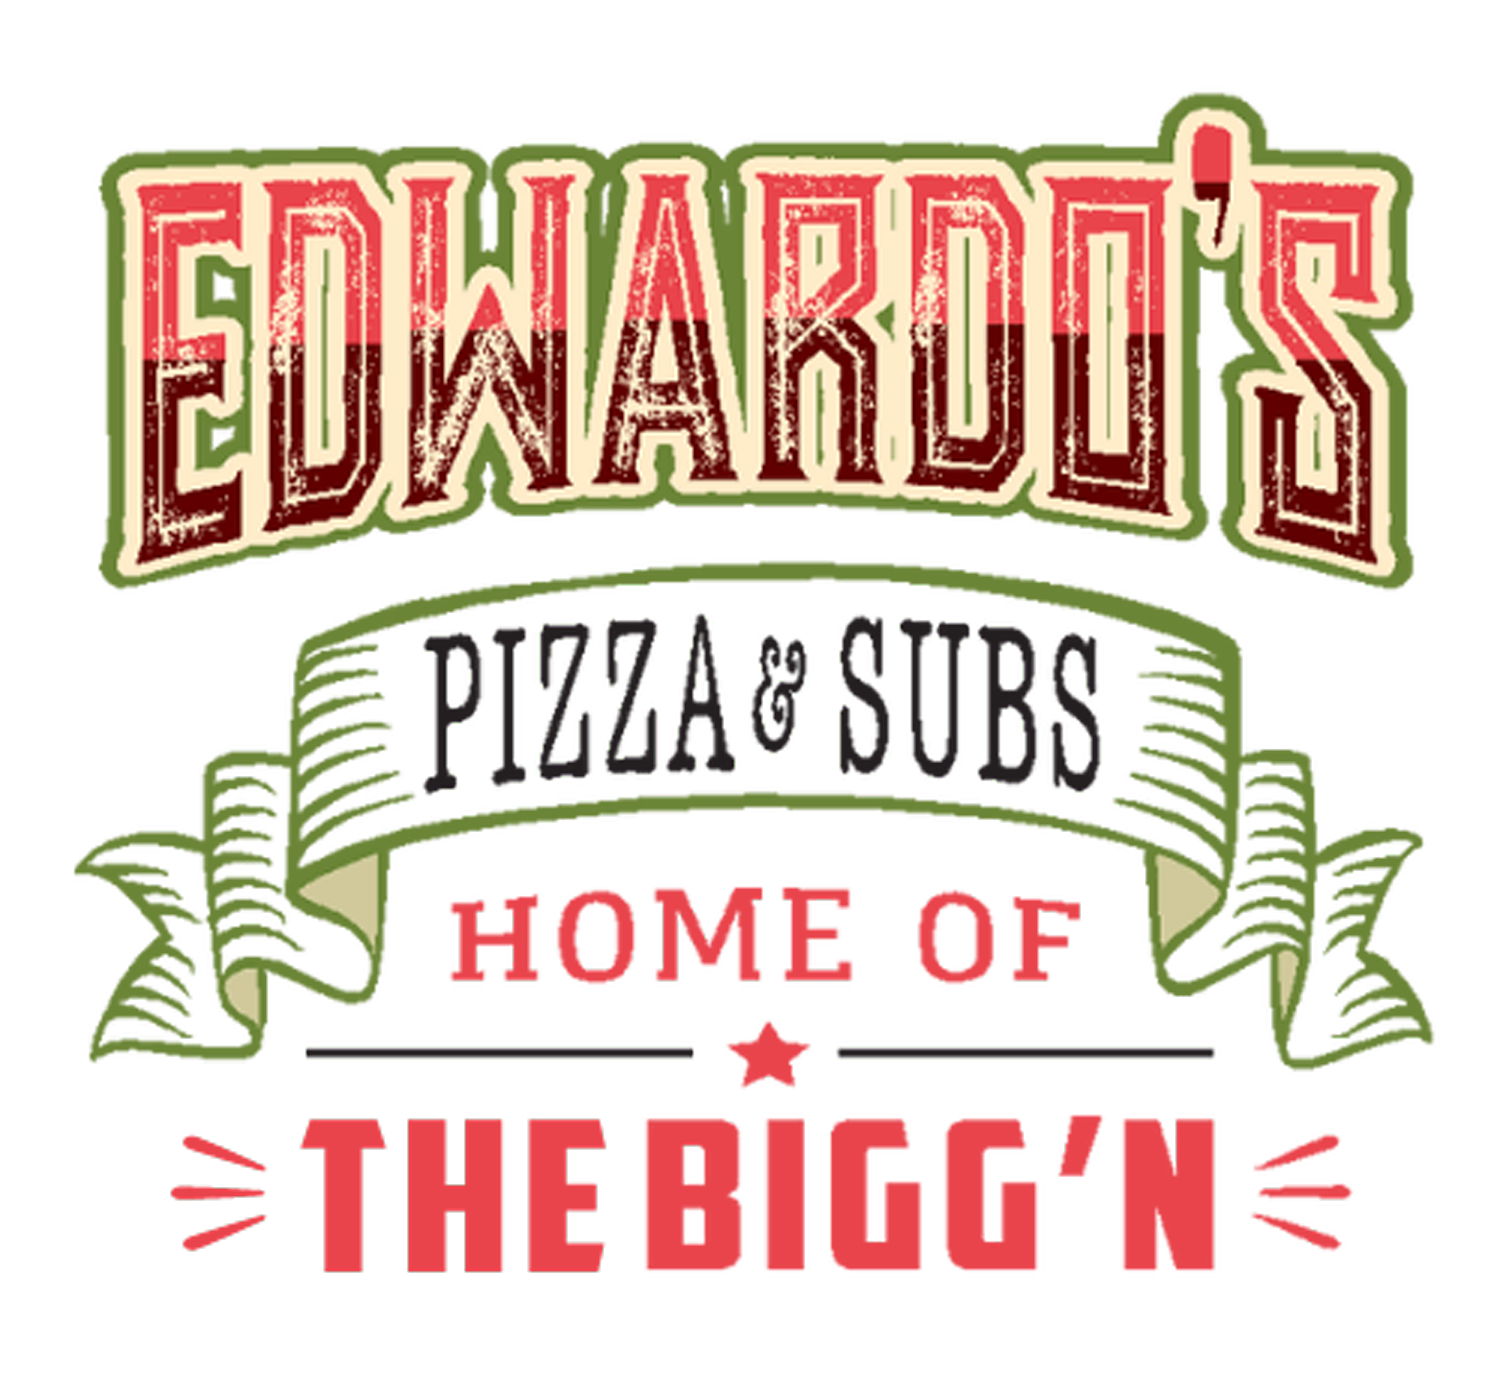 Edwardo's Pizza Home